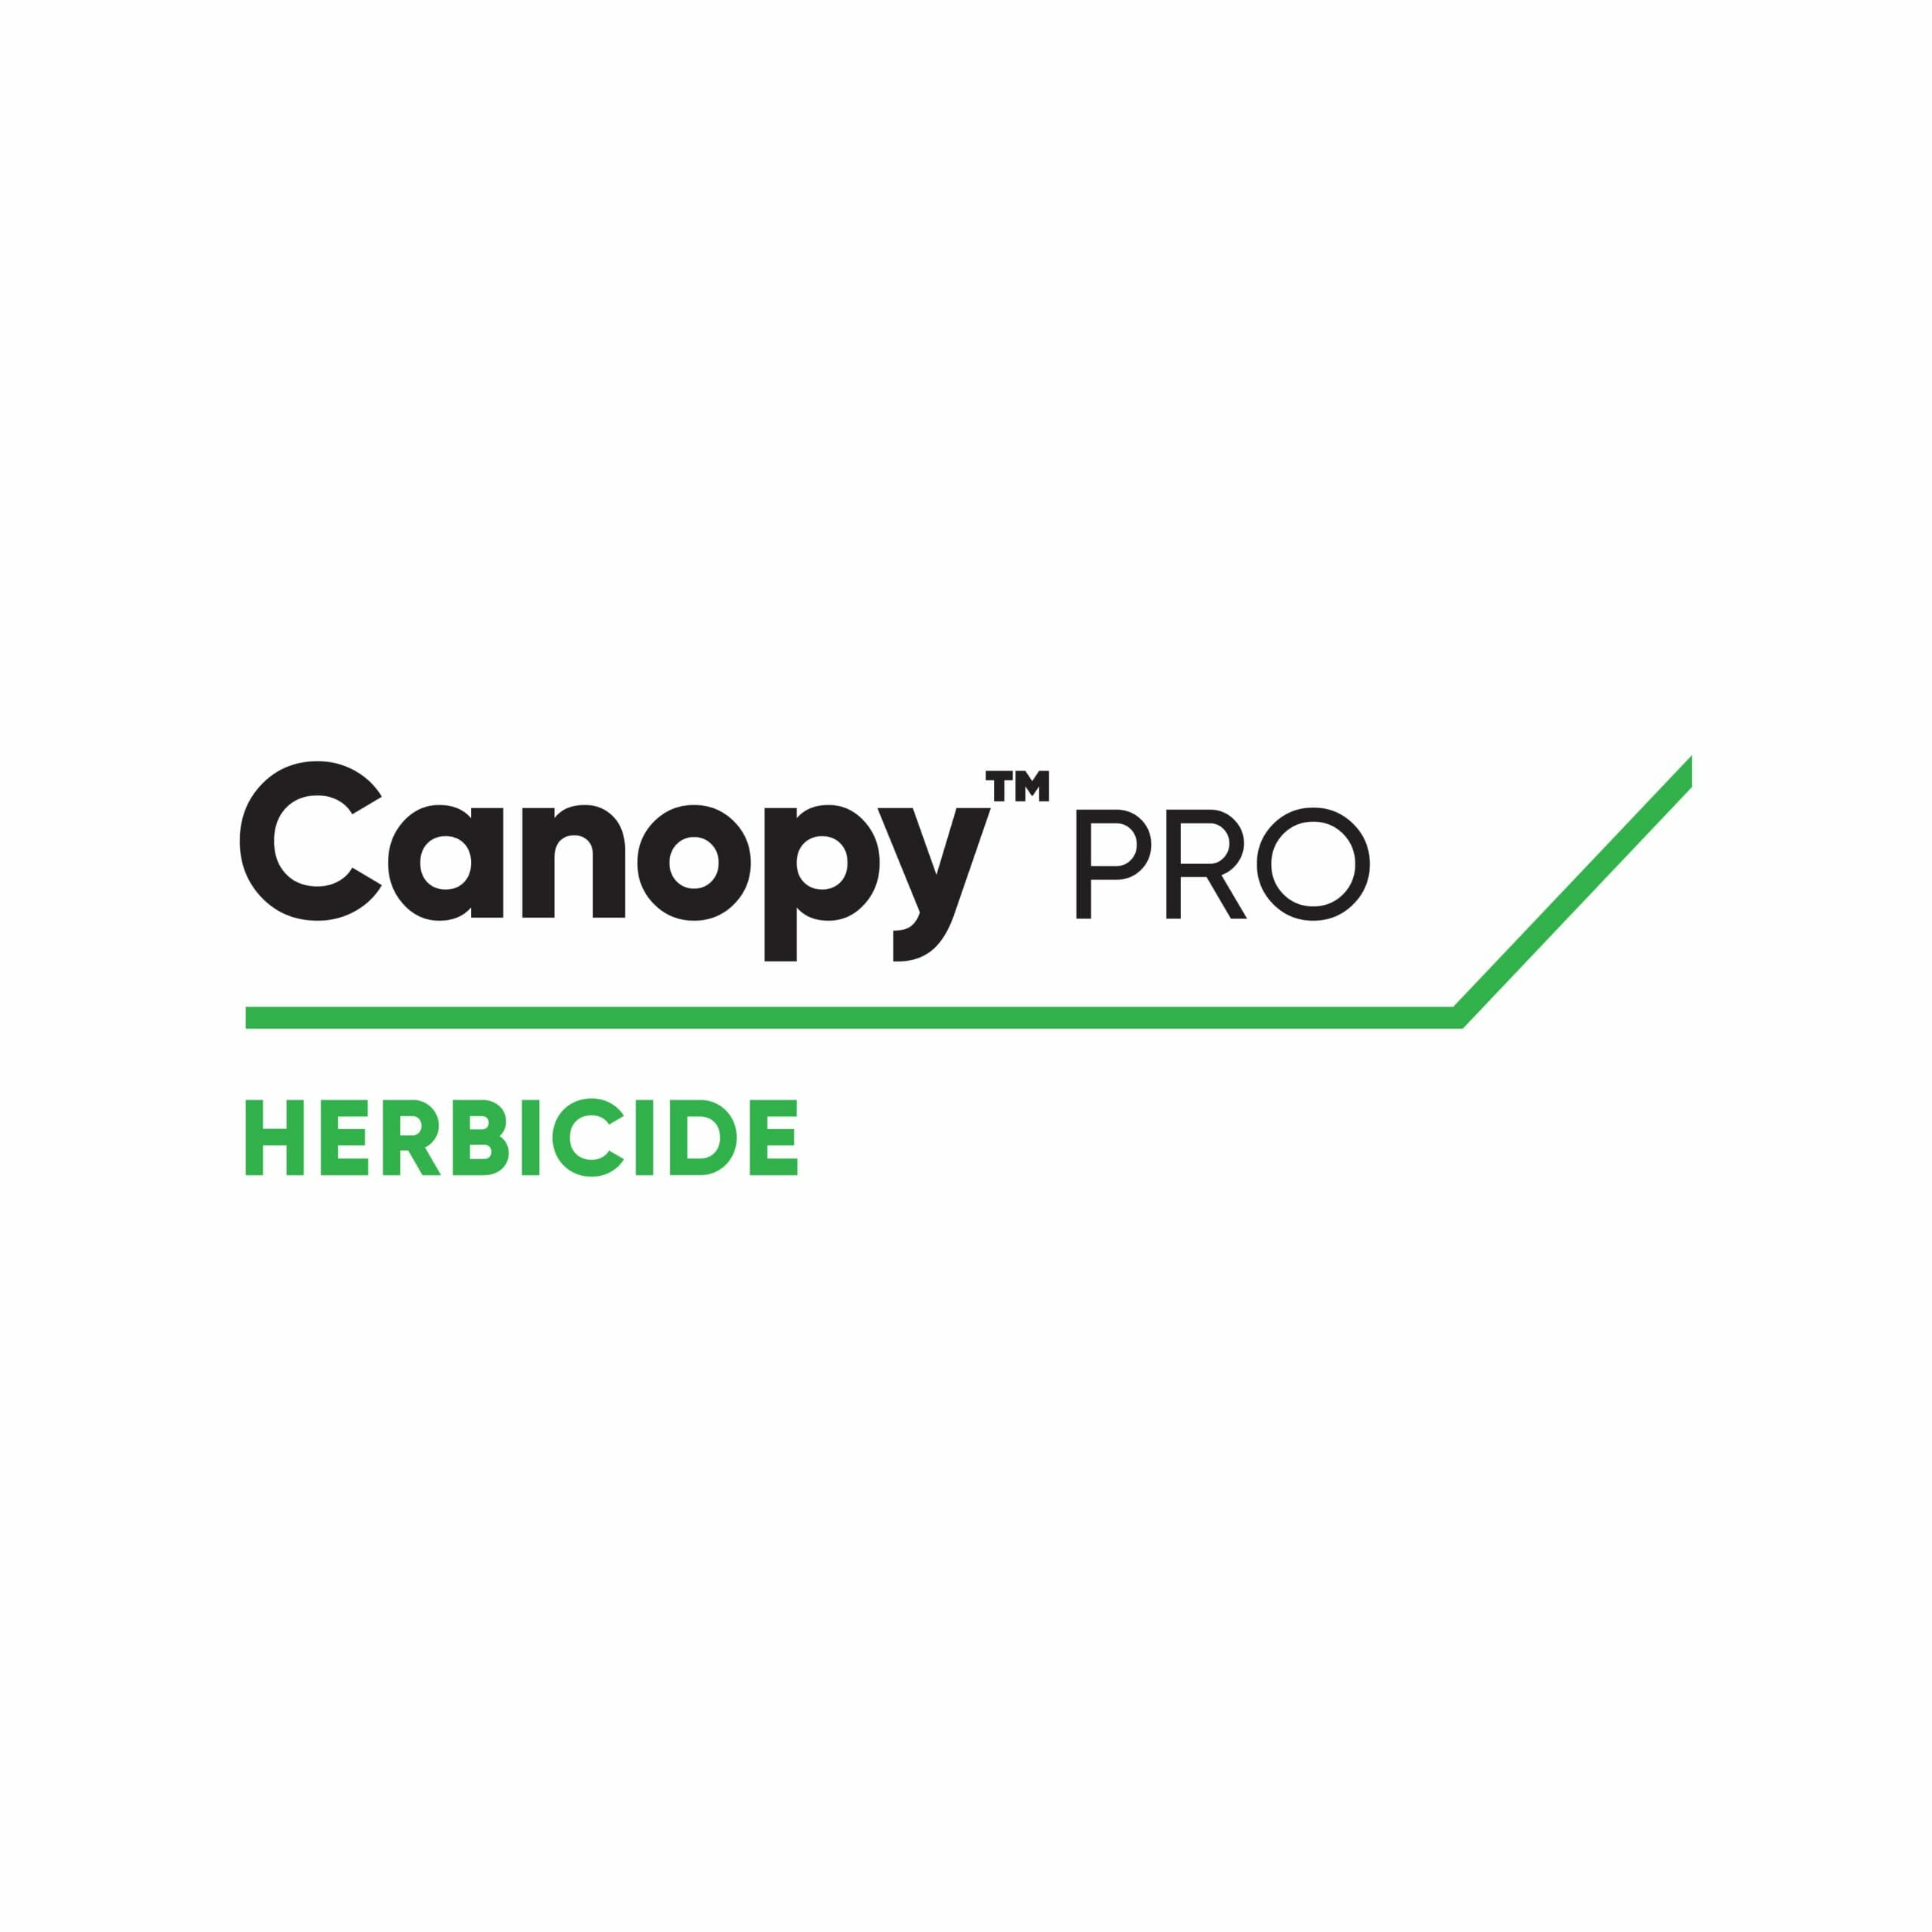 Canopy Pro